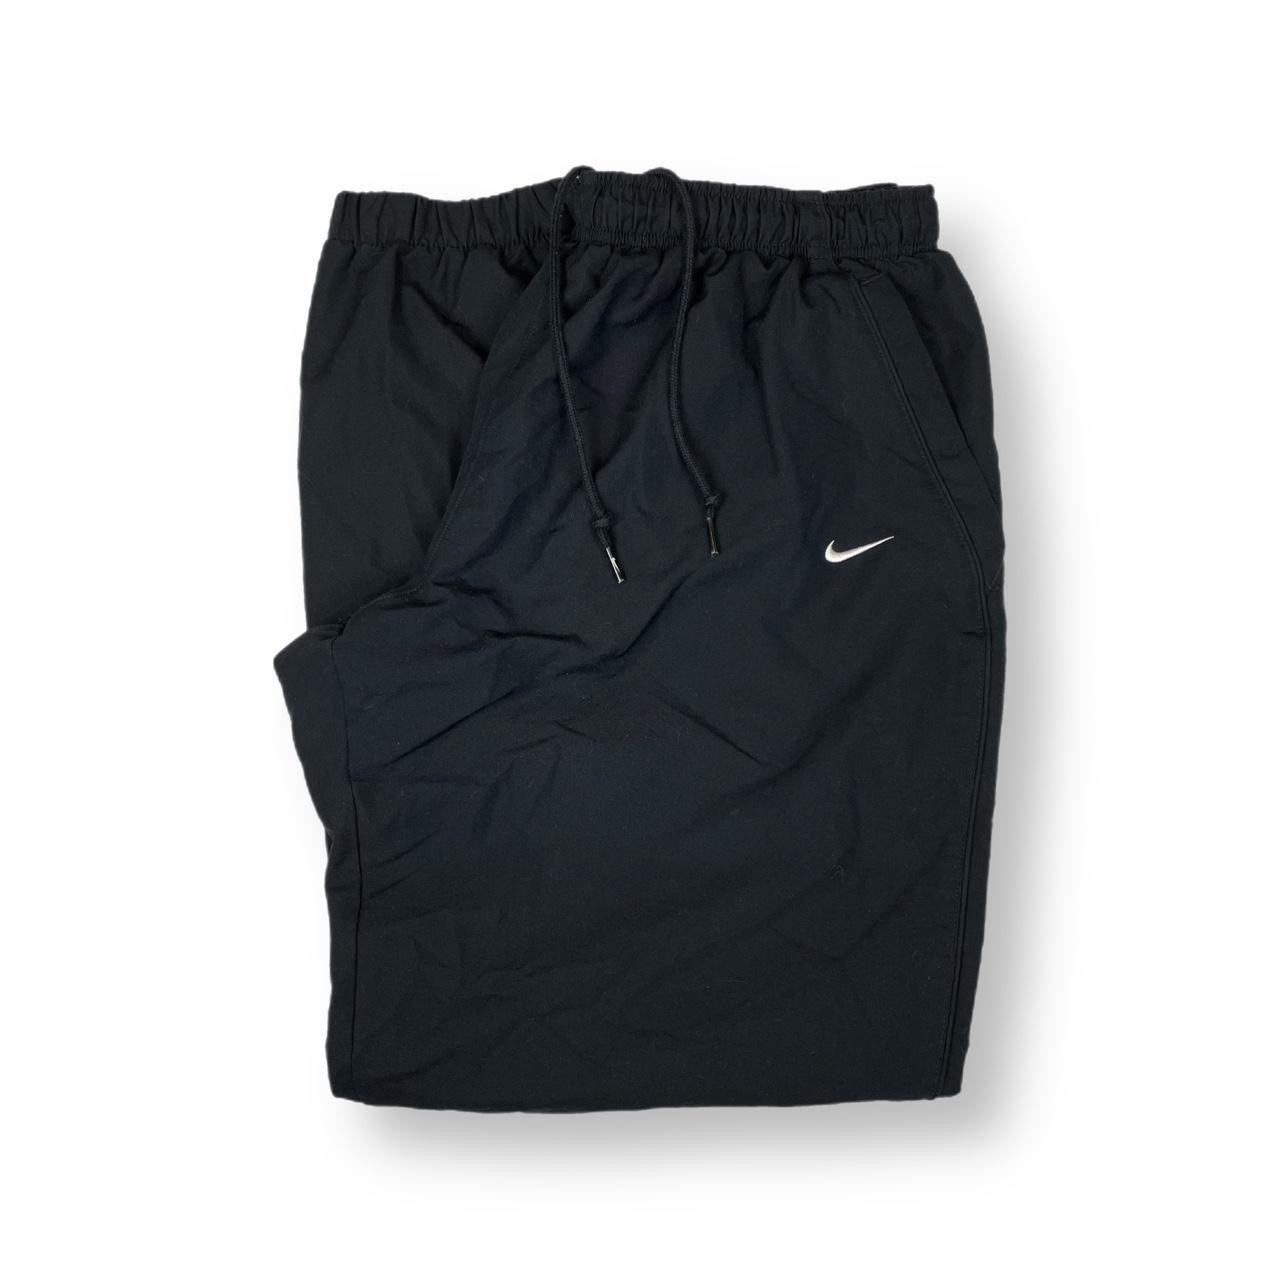 Vintage Nike Track Pants - Black